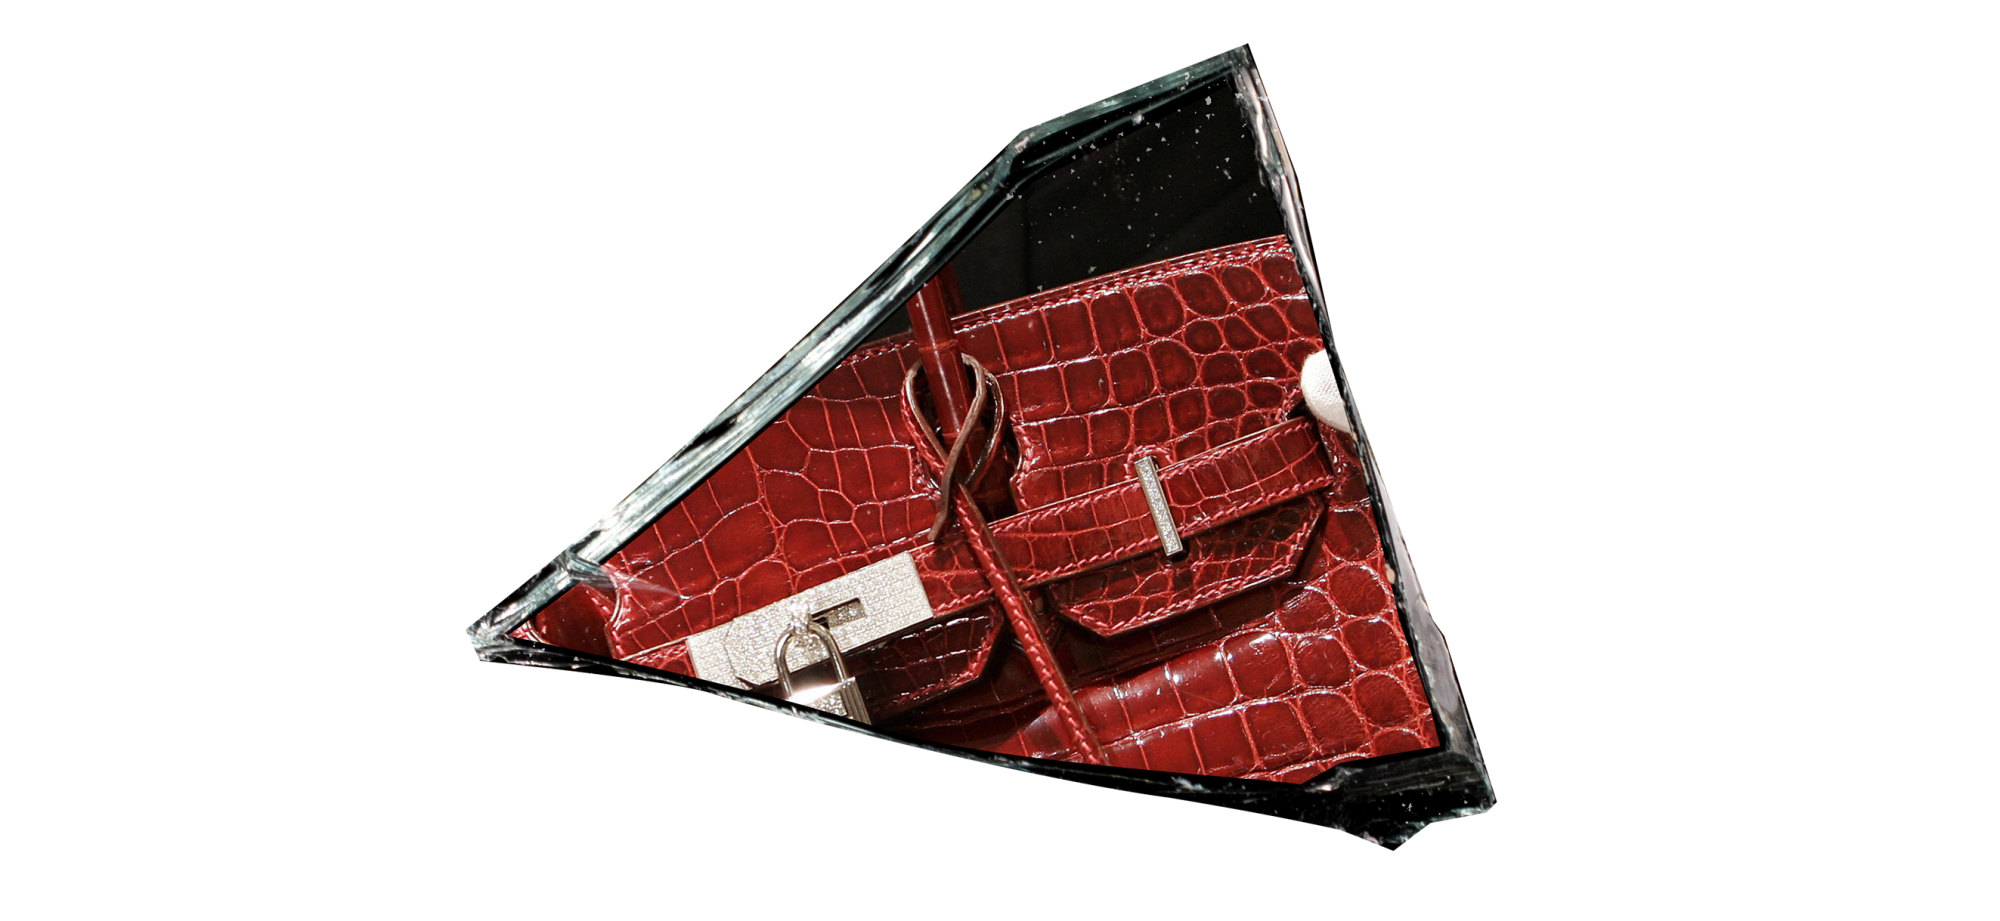 A burgundy Birkin bag superimposed onto a dark shard of glass